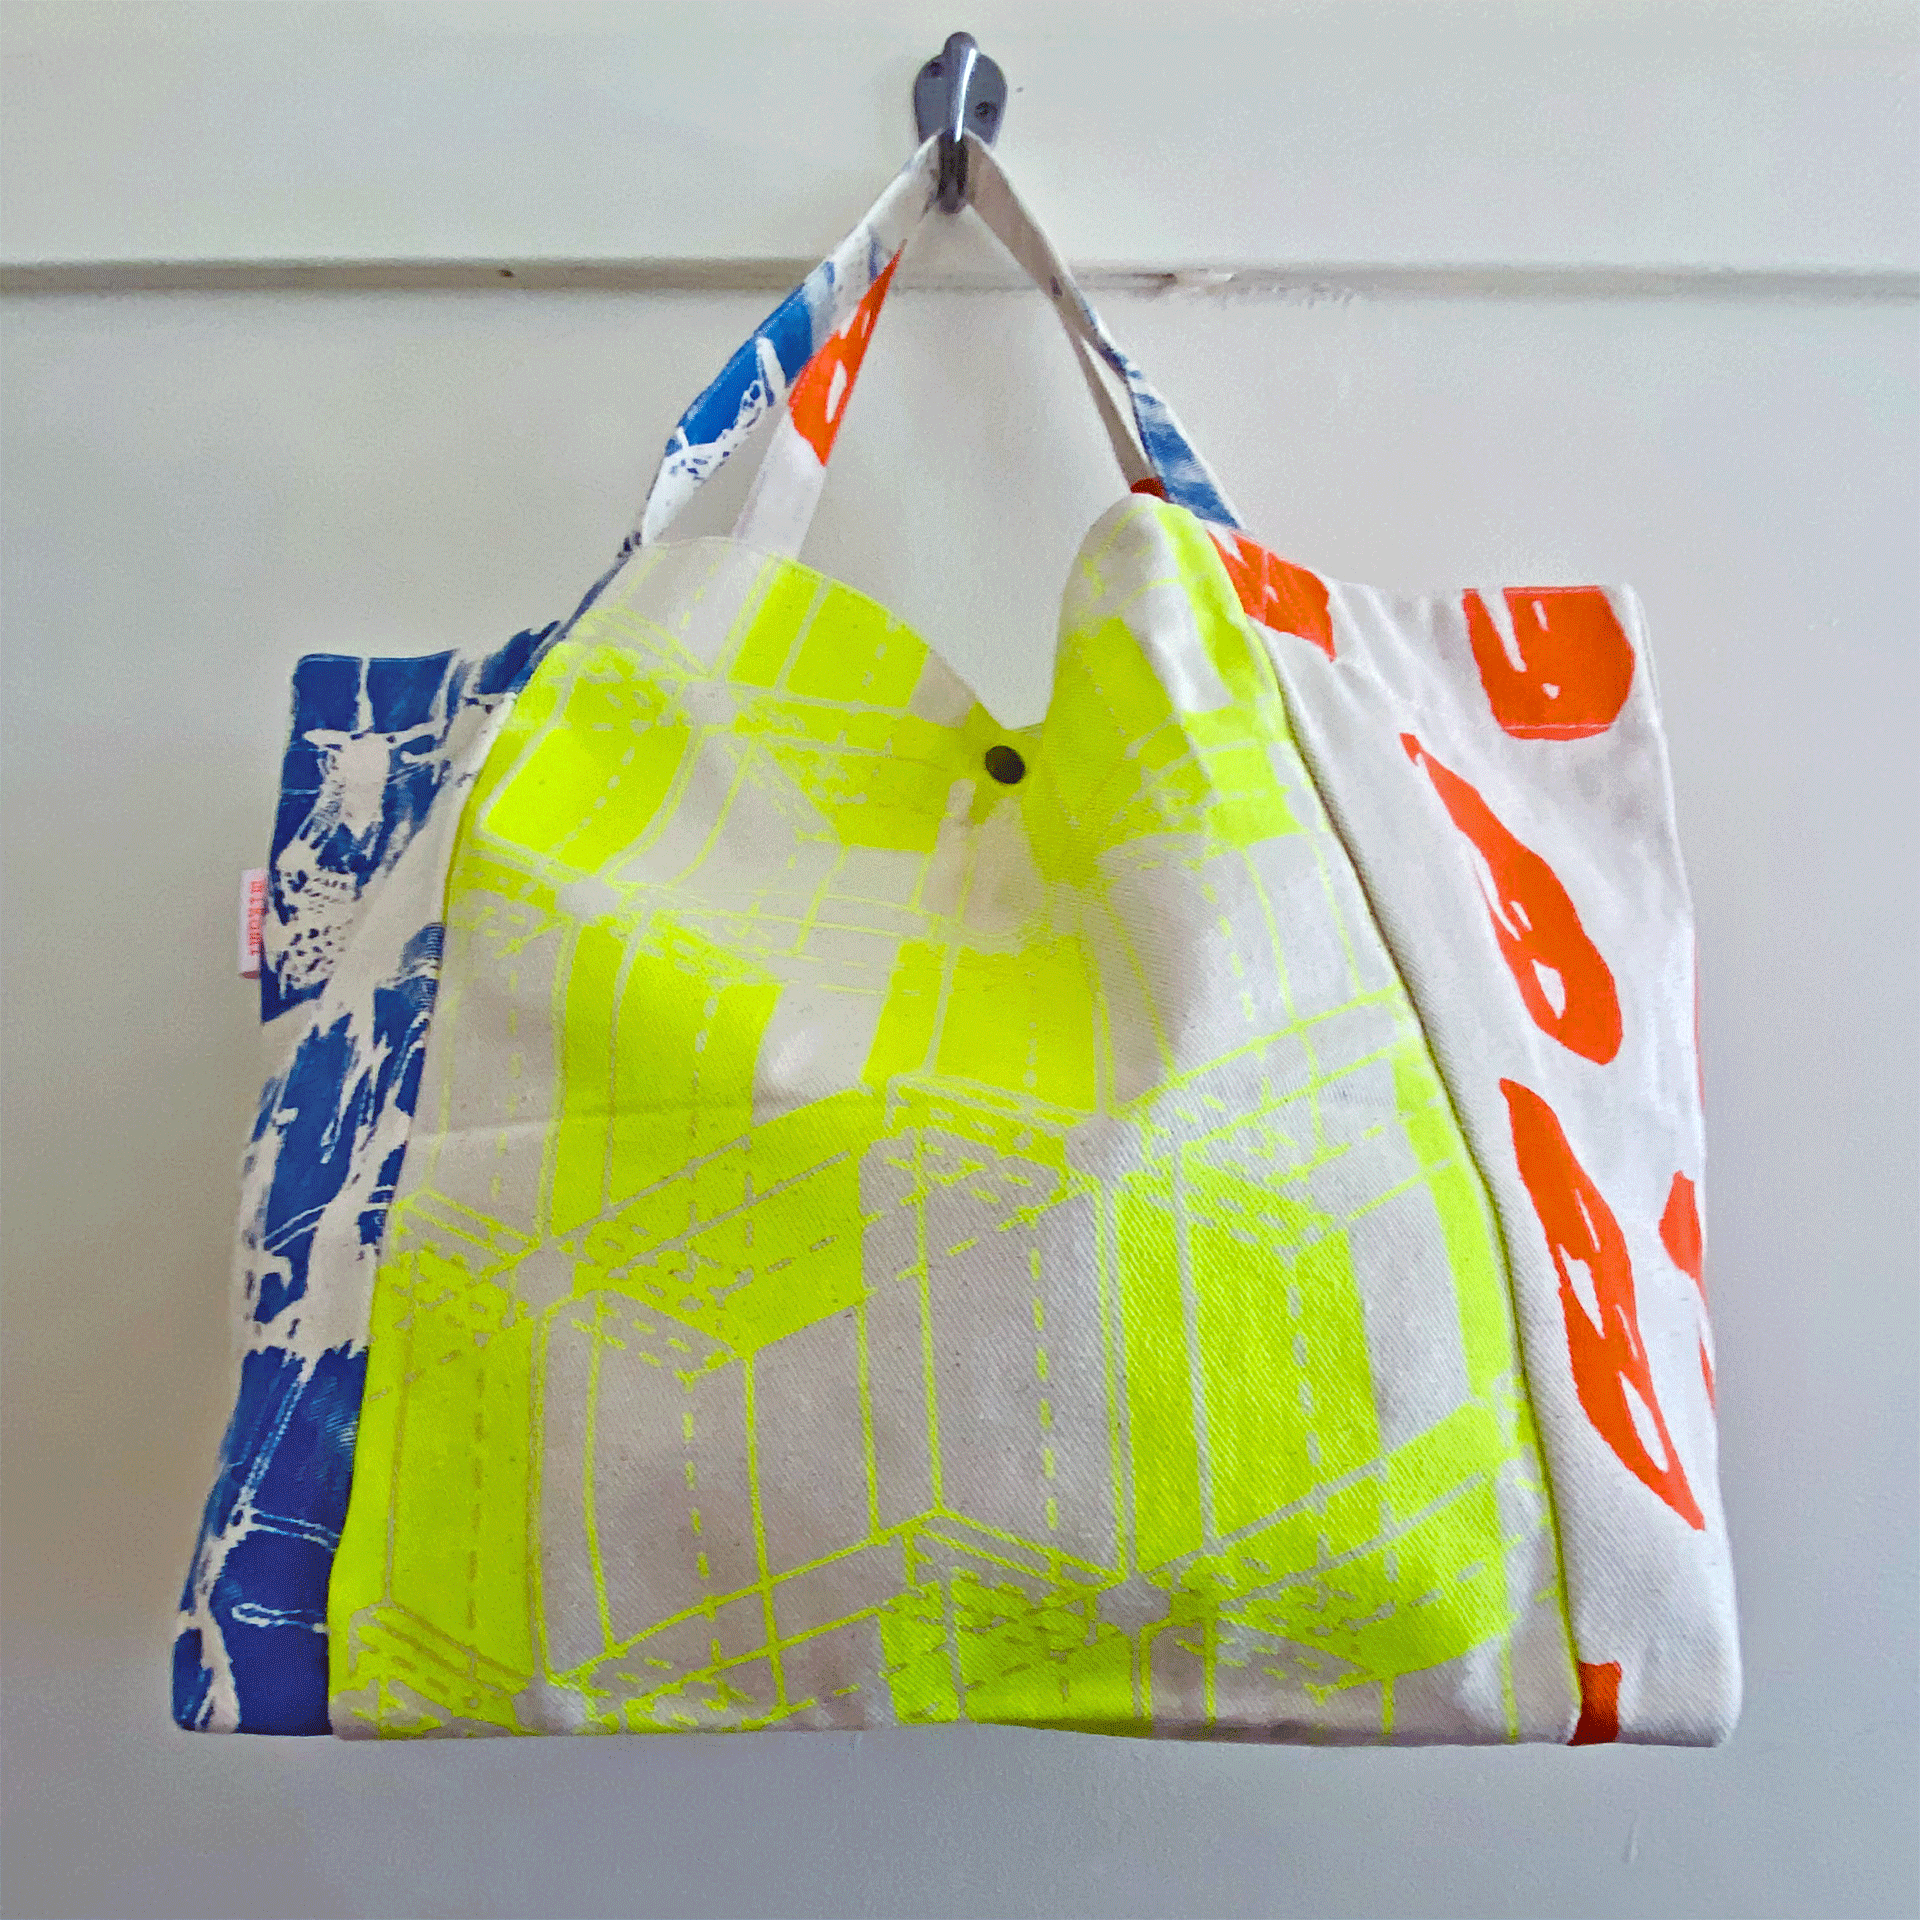 Cotton Canvas Tote Bags